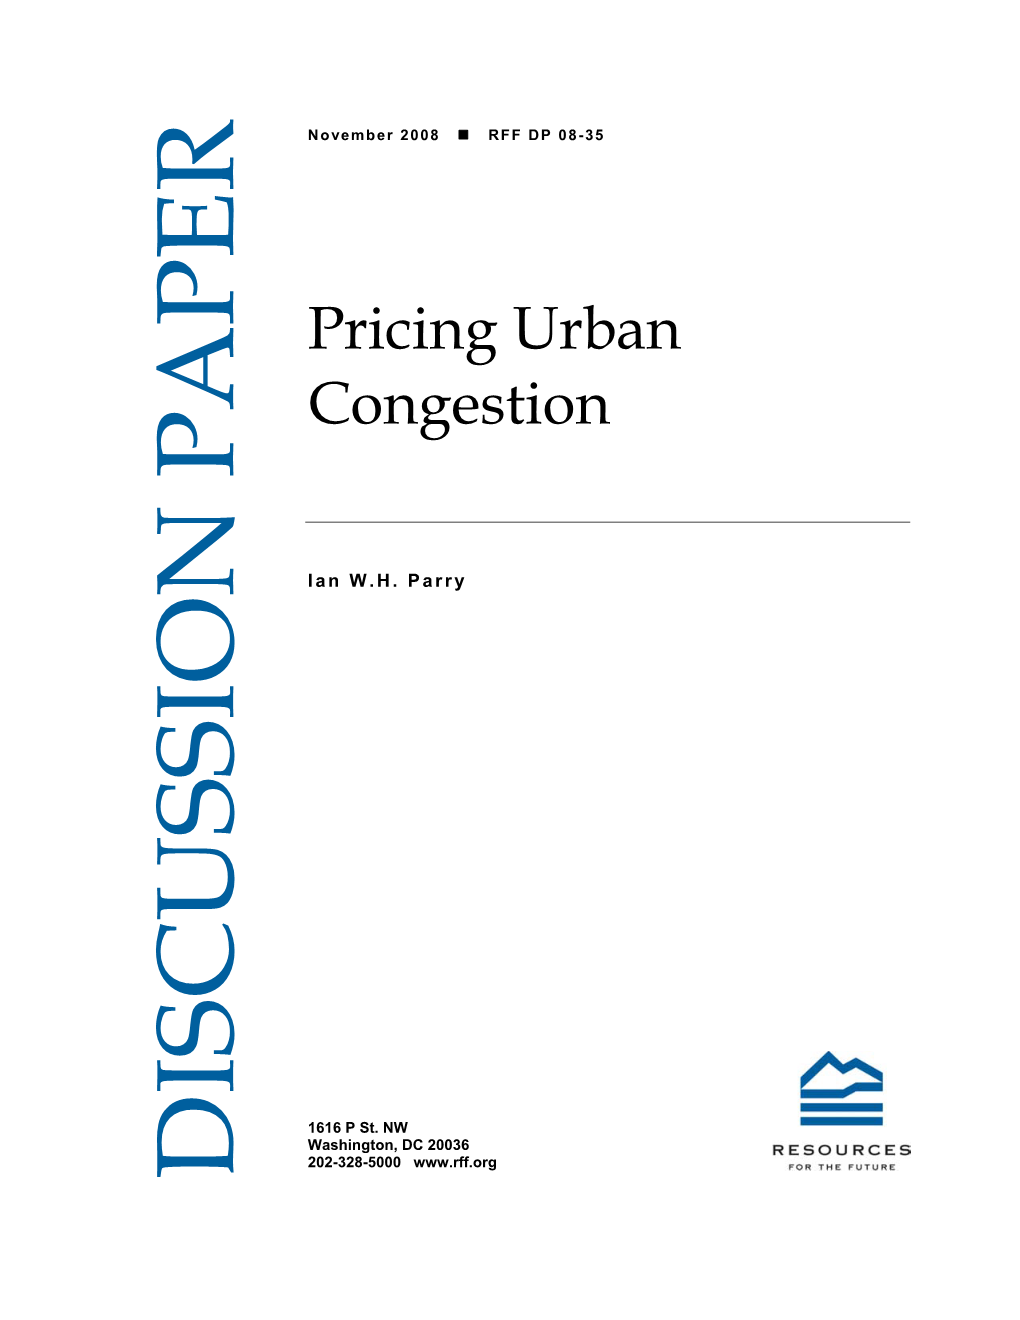 Pricing Urban Congestion